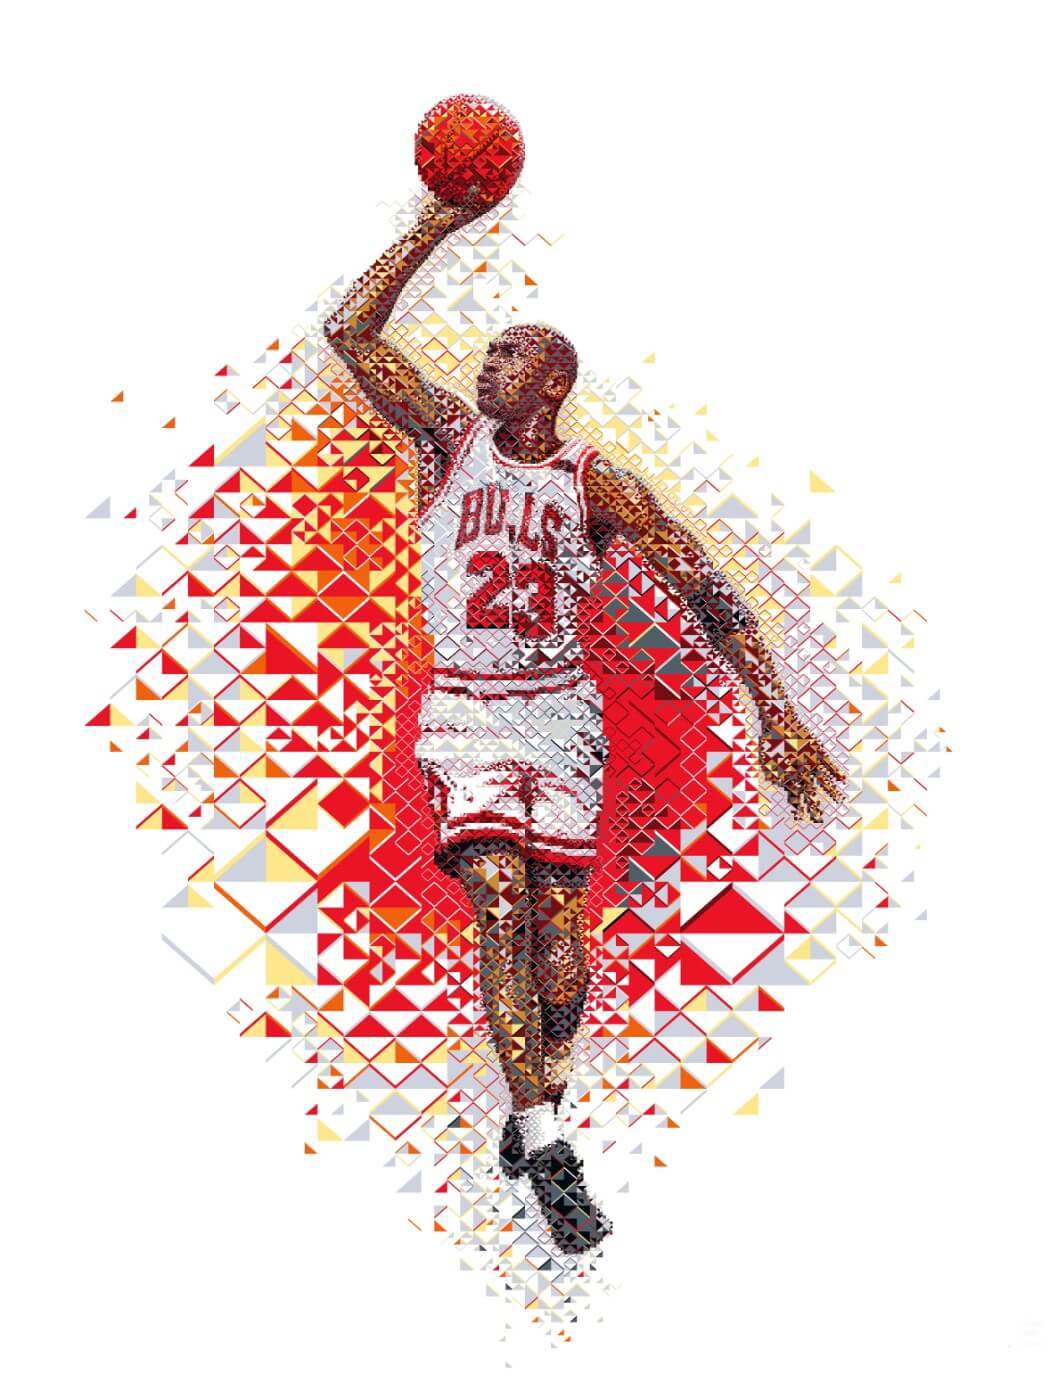 Michael Jordan Poster Chicago Bulls Art Print (18x24)